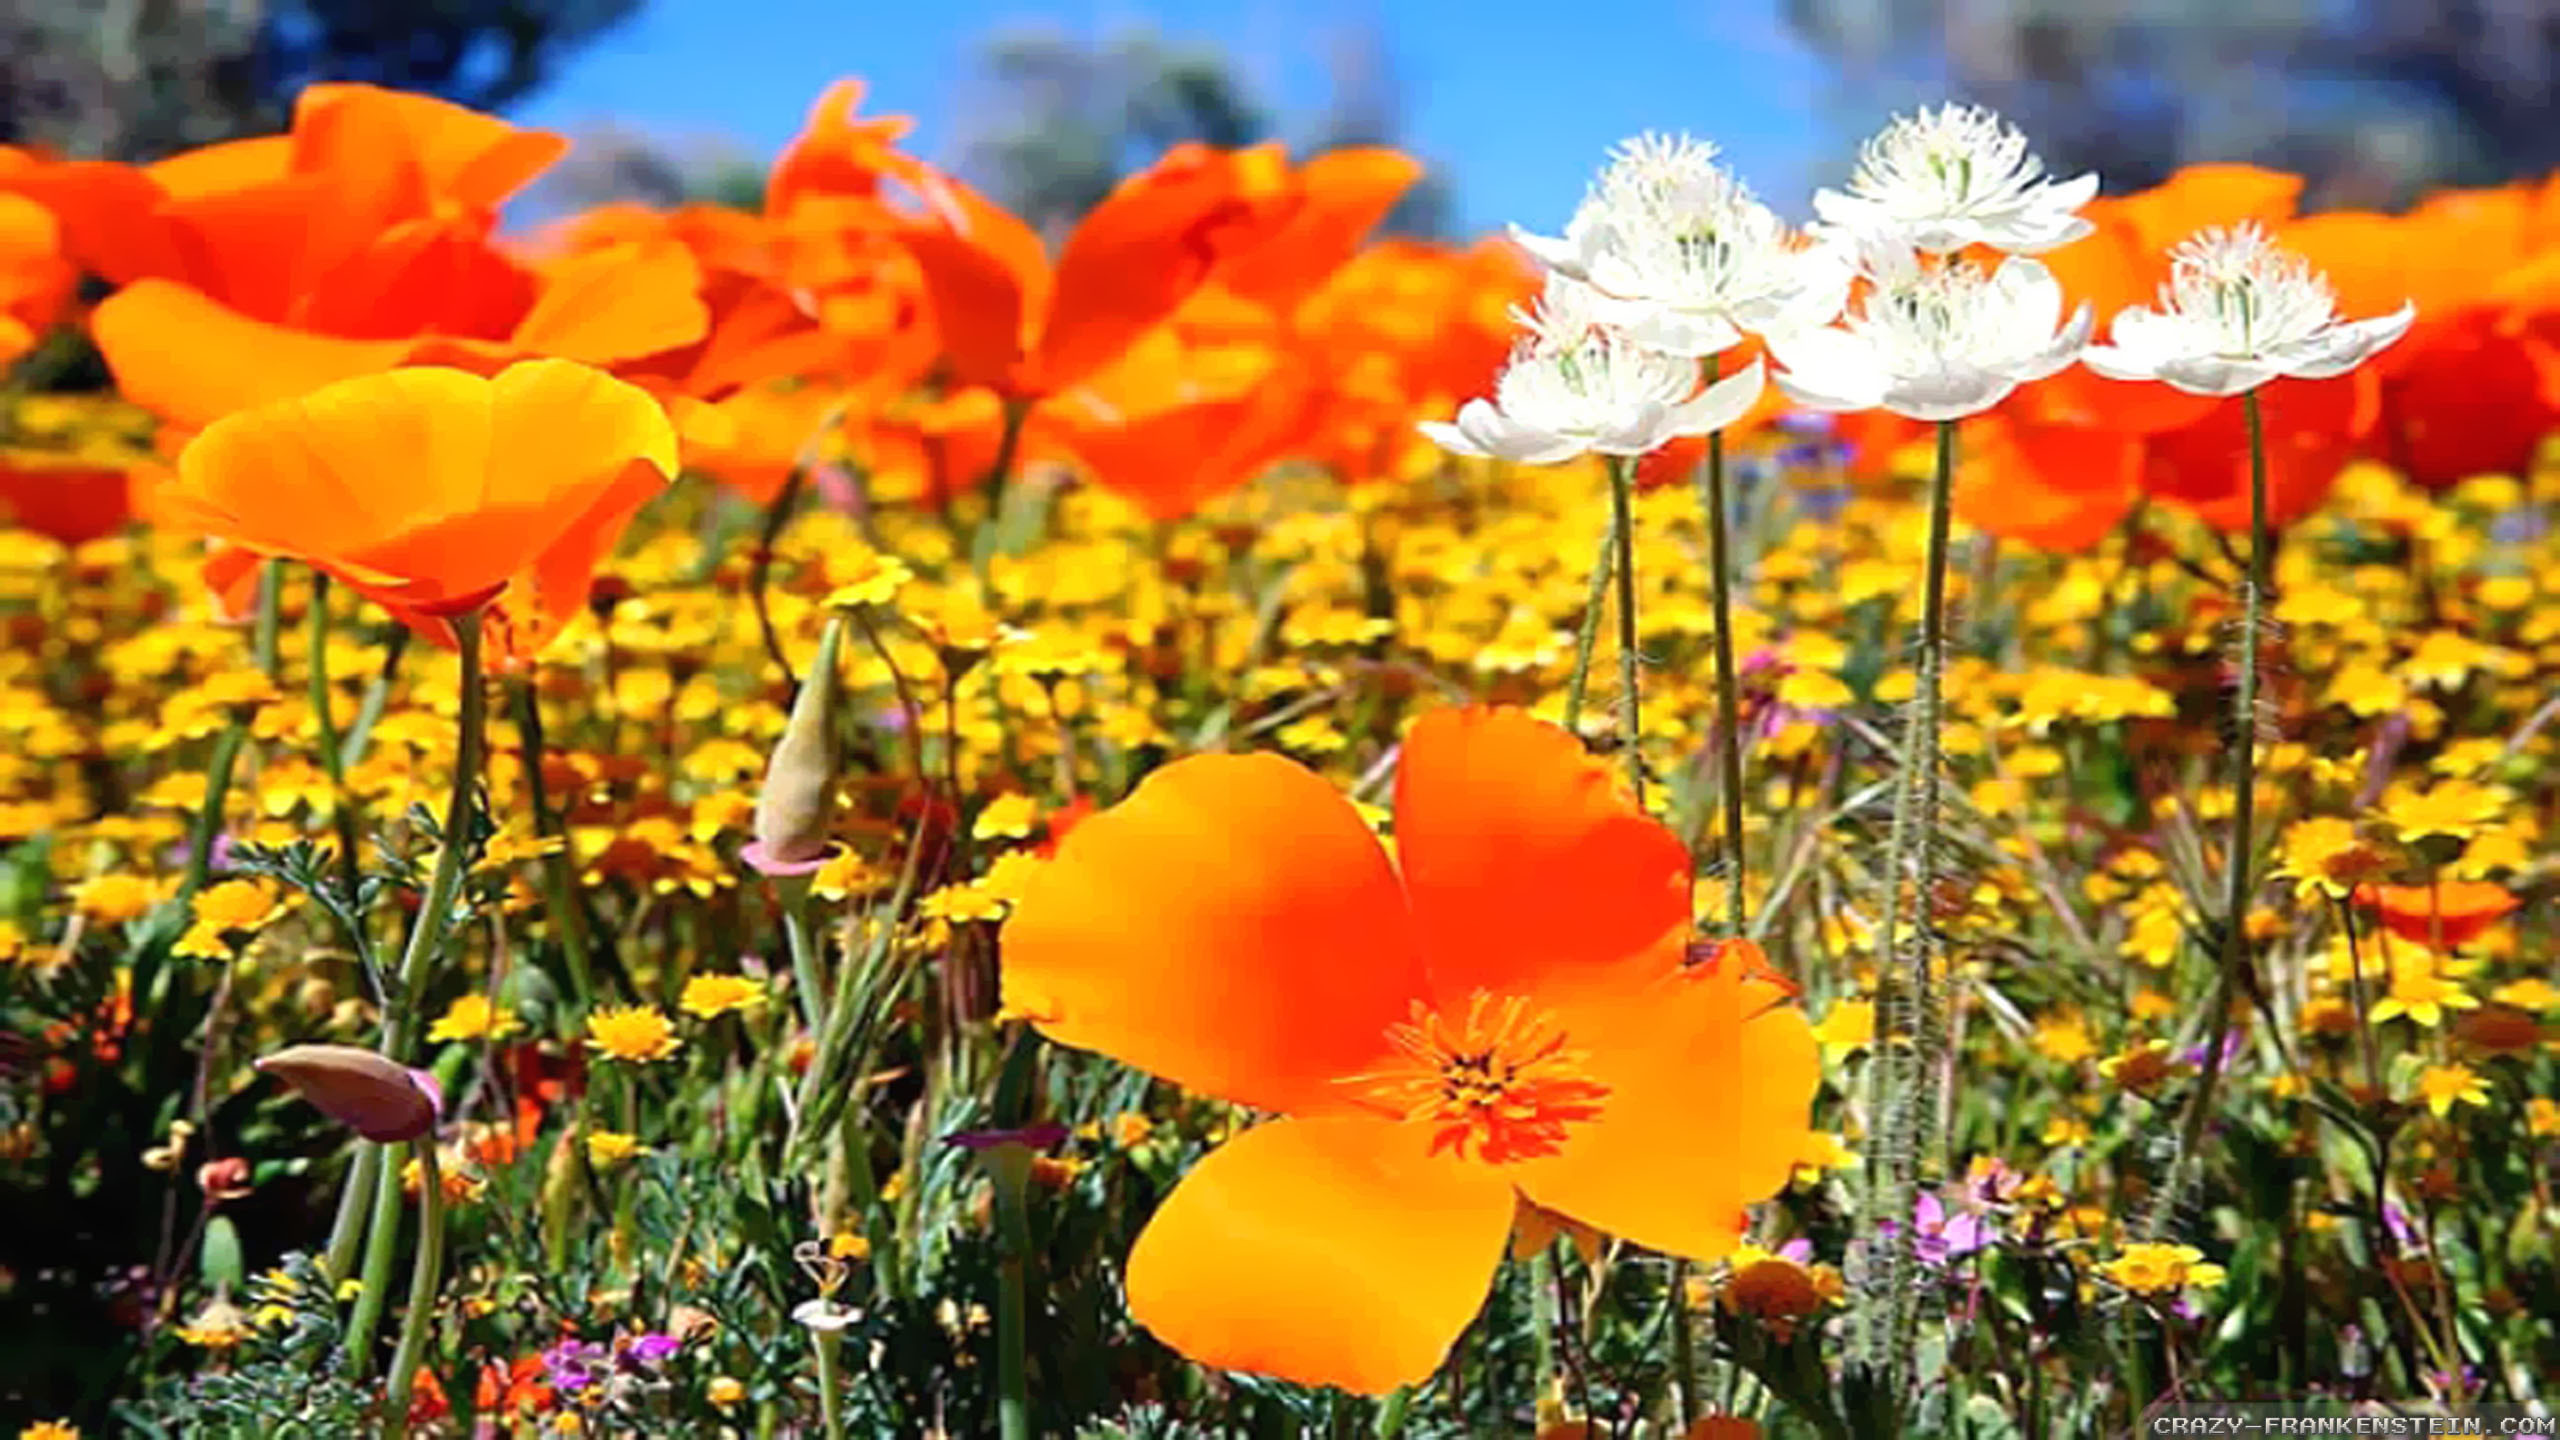 spring season wallpaper,flower,eschscholzia californica,flowering plant,plant,natural landscape